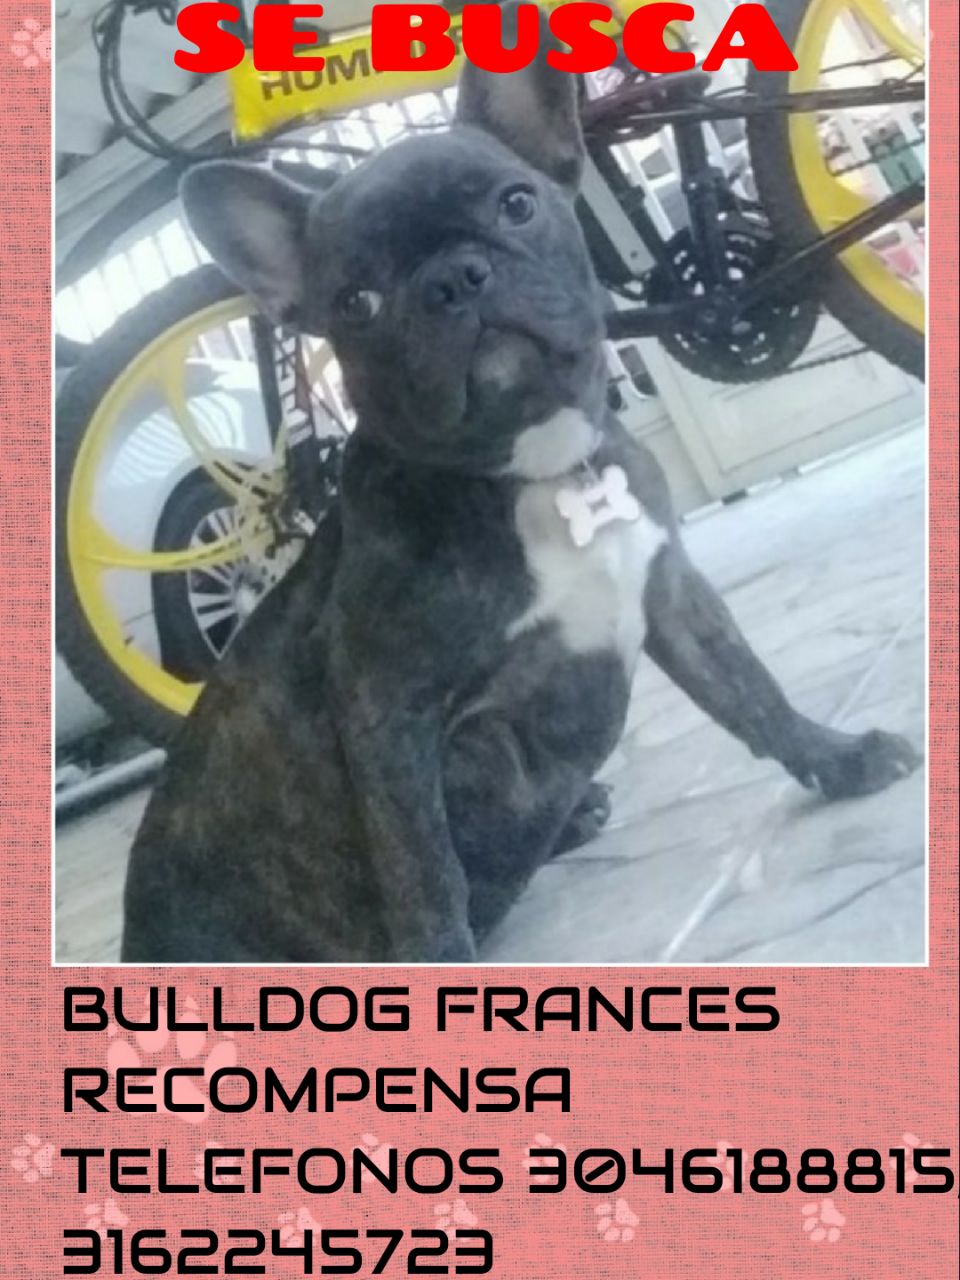 bulldog frances